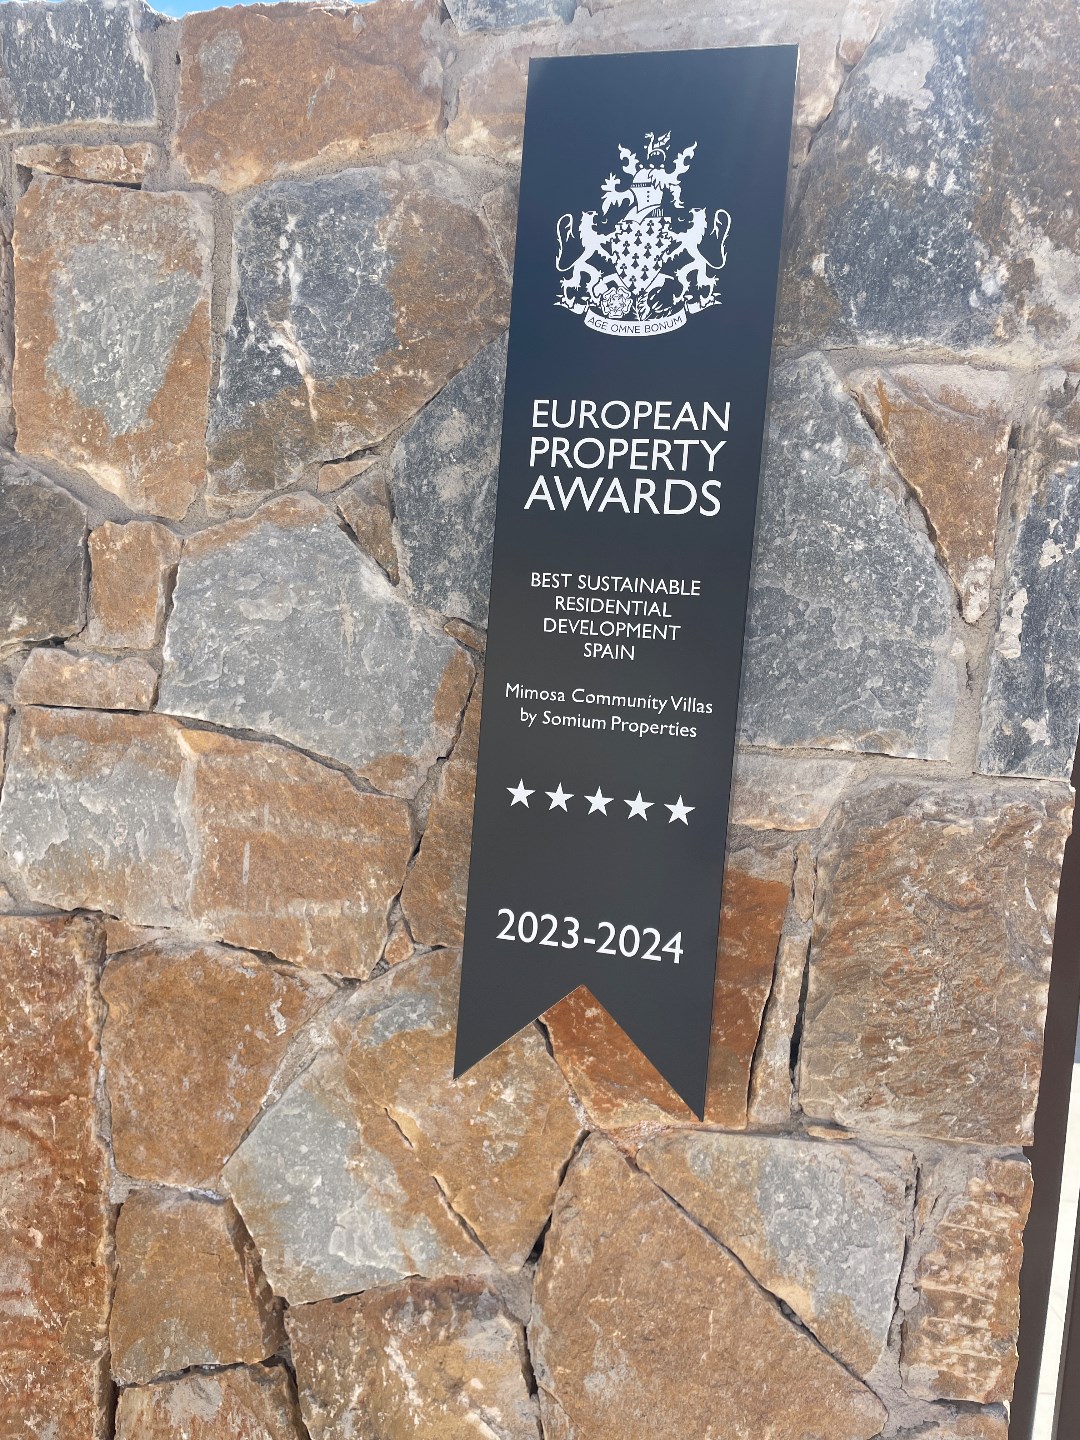 The European Property Awards